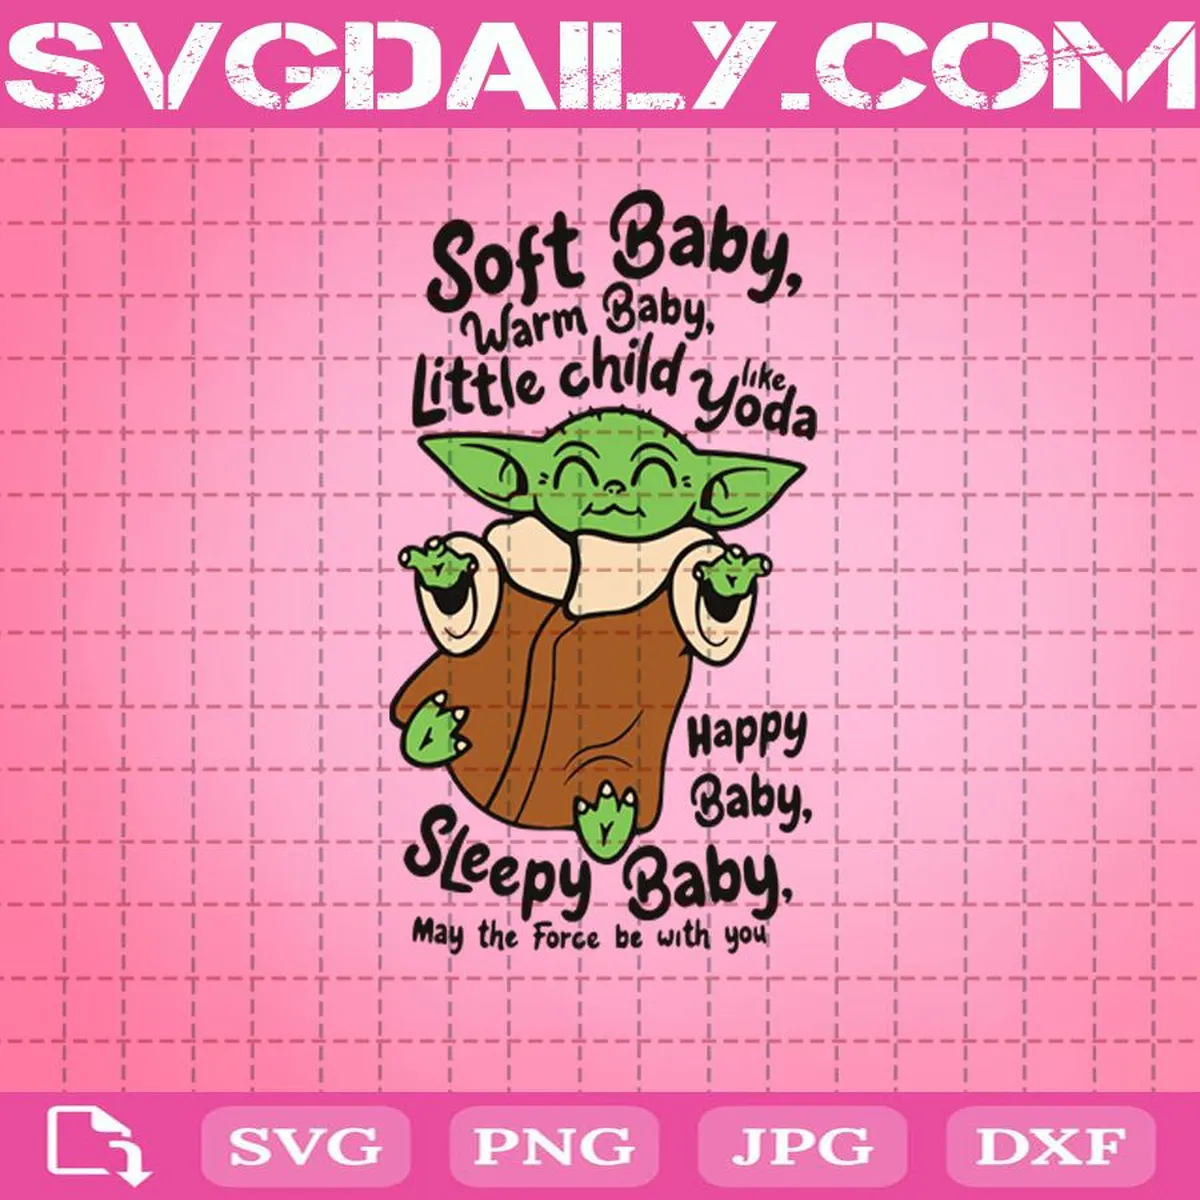 Soft Baby Warm Baby Little Child Like Yoda Svg, Soft Baby Alien Svg, Warm Baby Svg, Little Child Like Yoda Svg, Baby Yoda Svg, Baby Yoda Star Wars